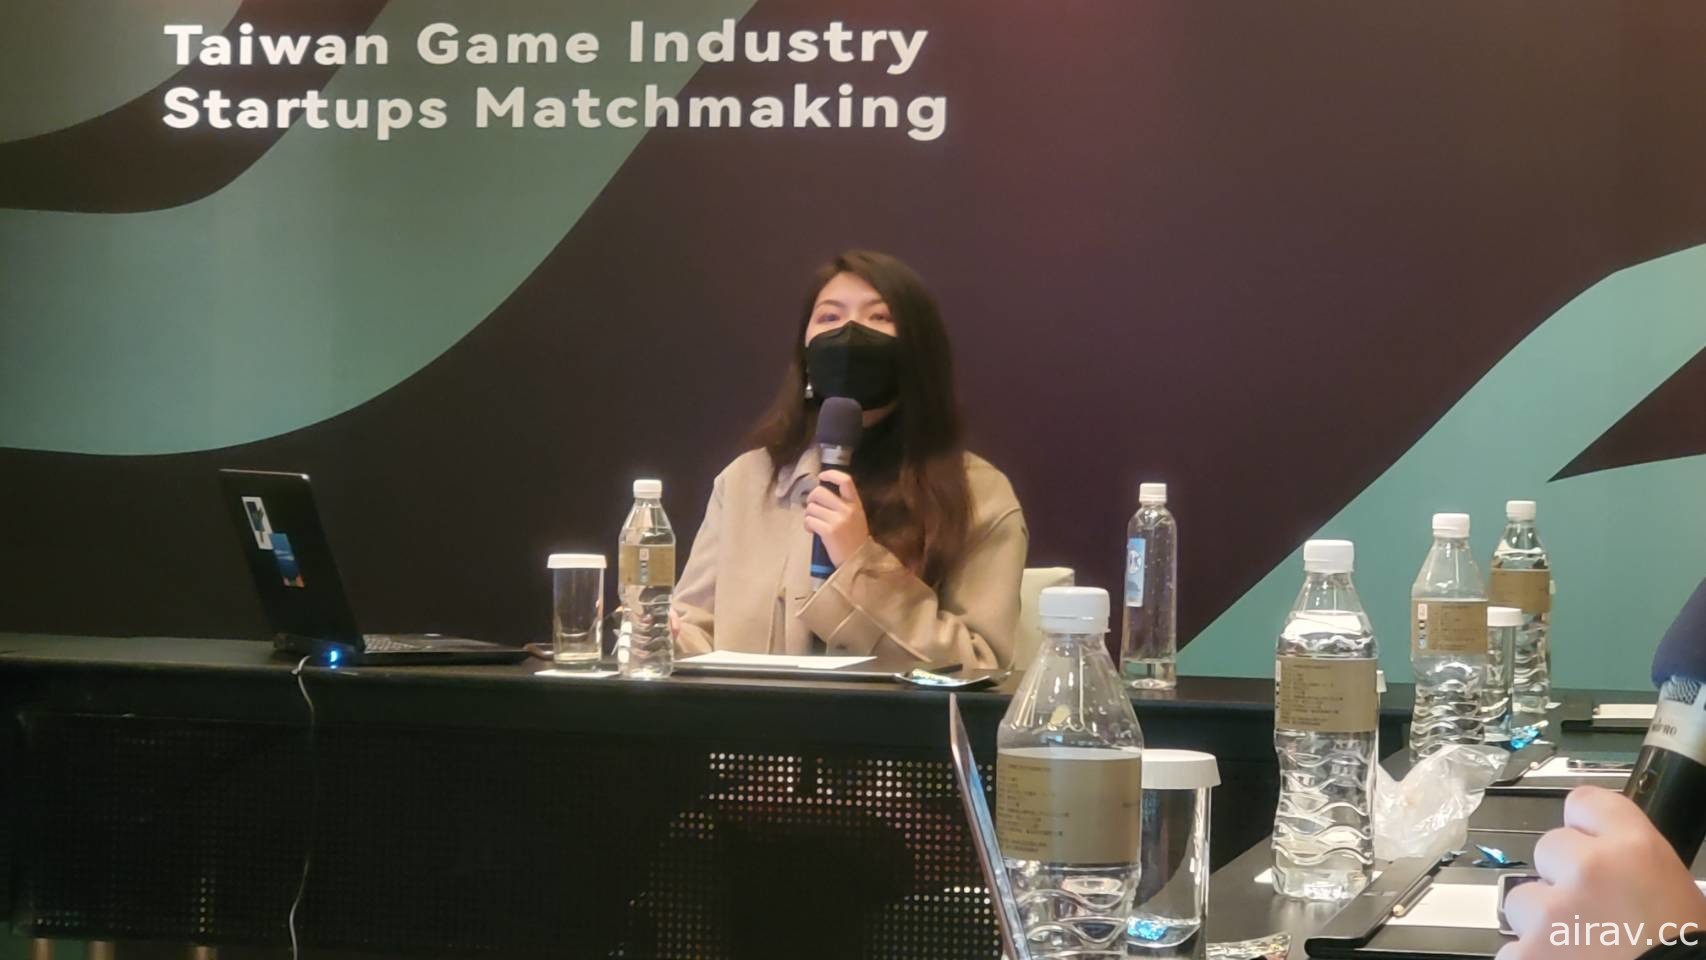 【TpGS 22】台湾游戏产业新创媒合会昨日登场 协助台湾自制独立游戏跨足海外市场